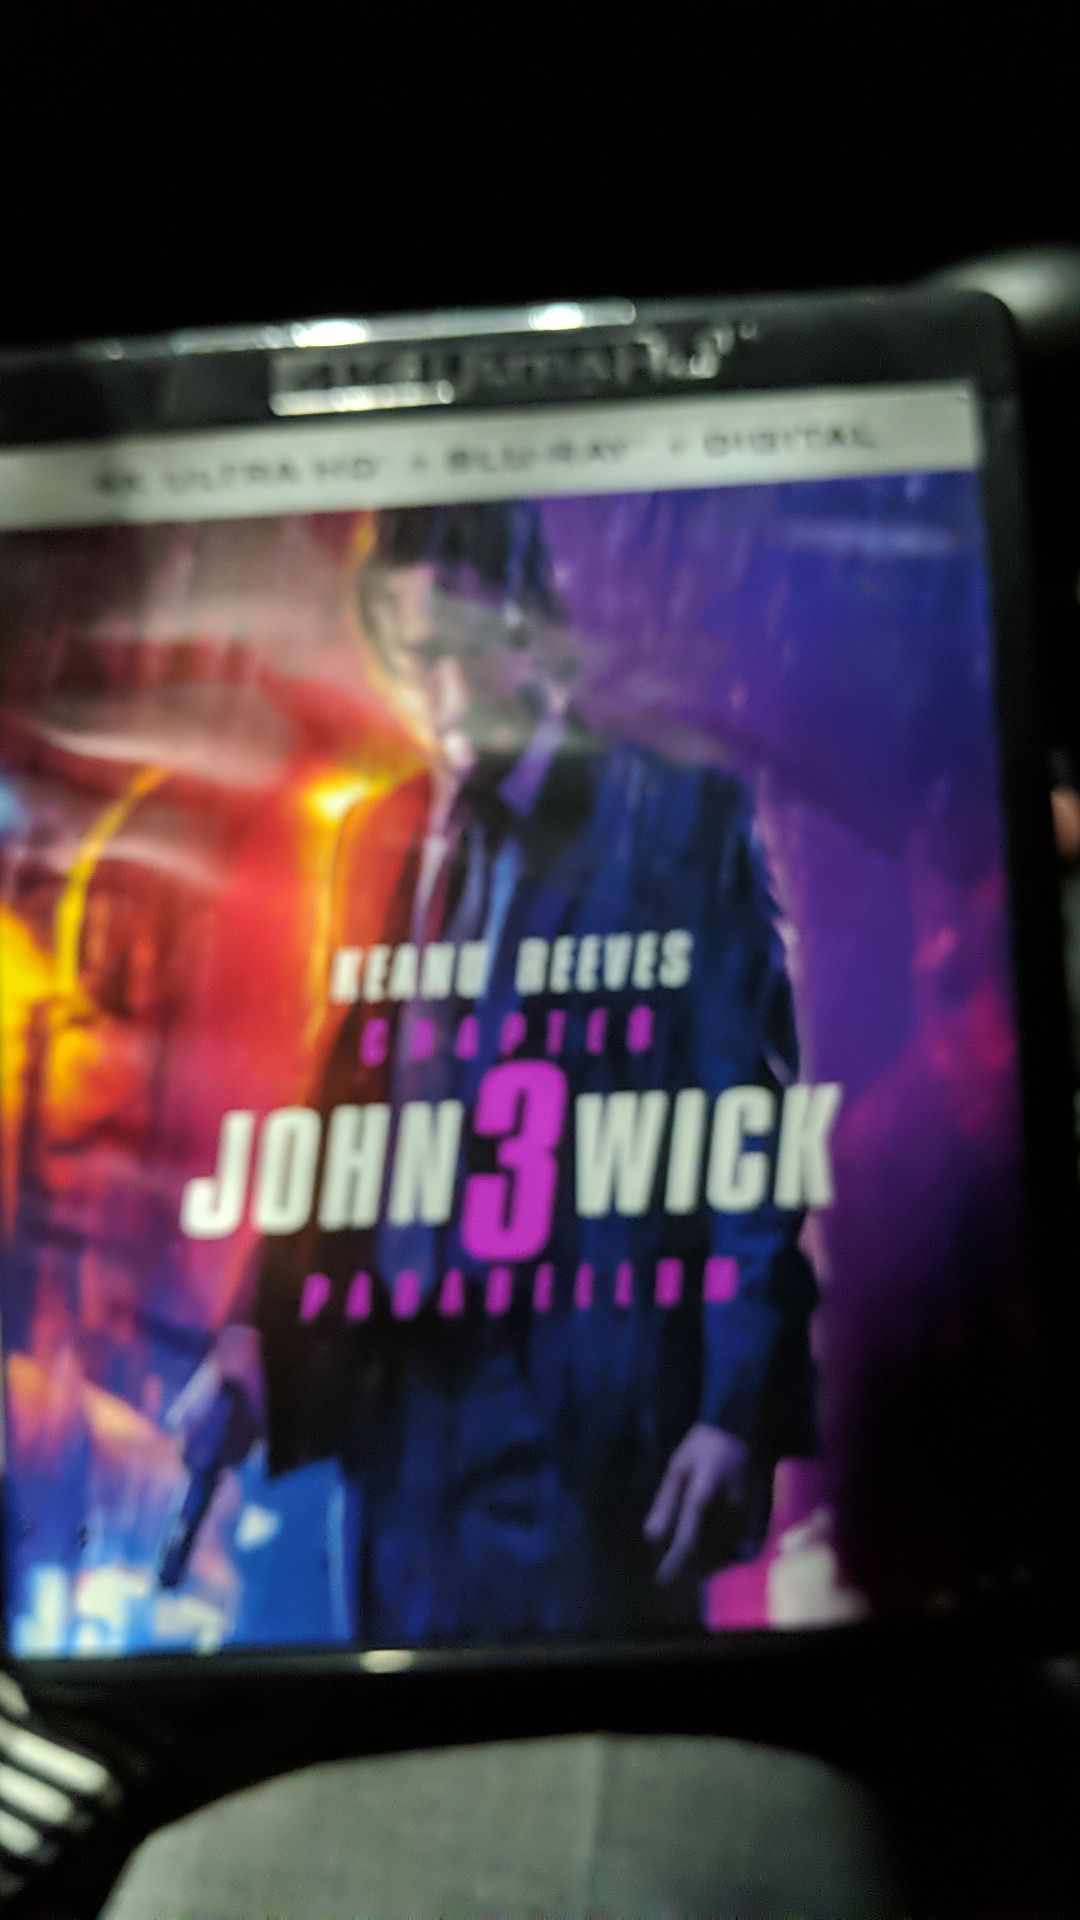 John wick 3 and gears of war 4